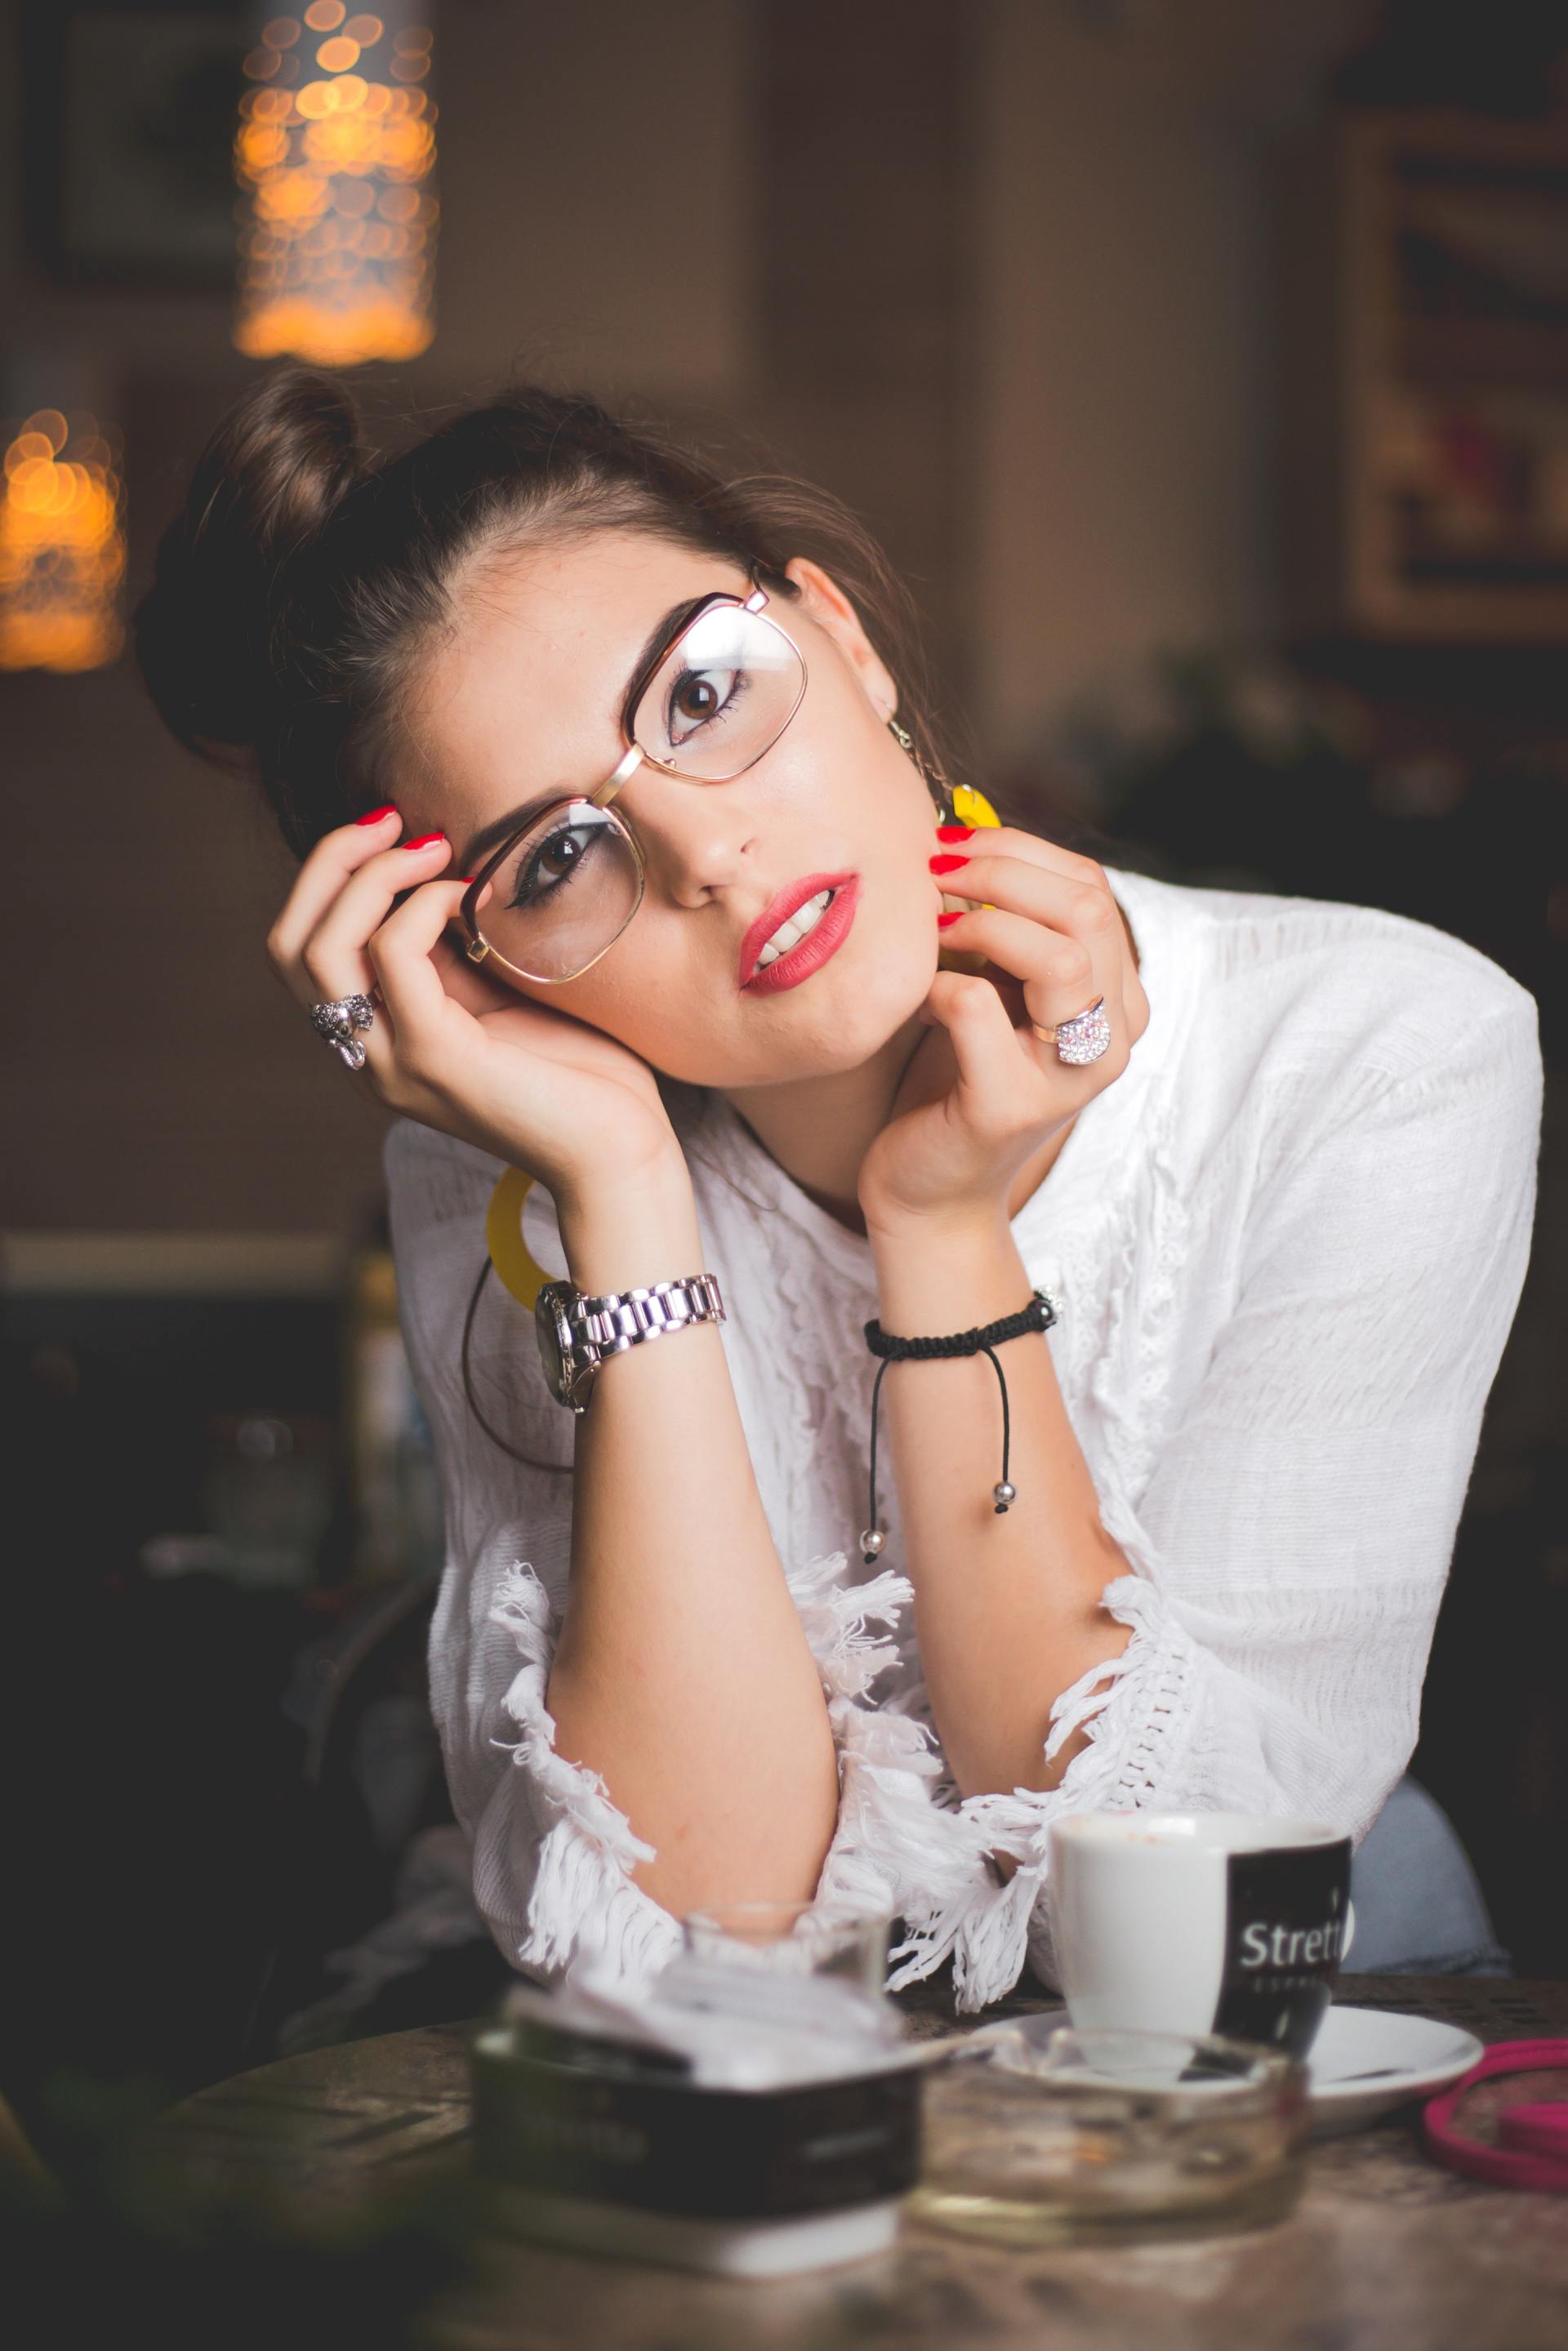 A woman in prescription eyewear to correct farsightedness